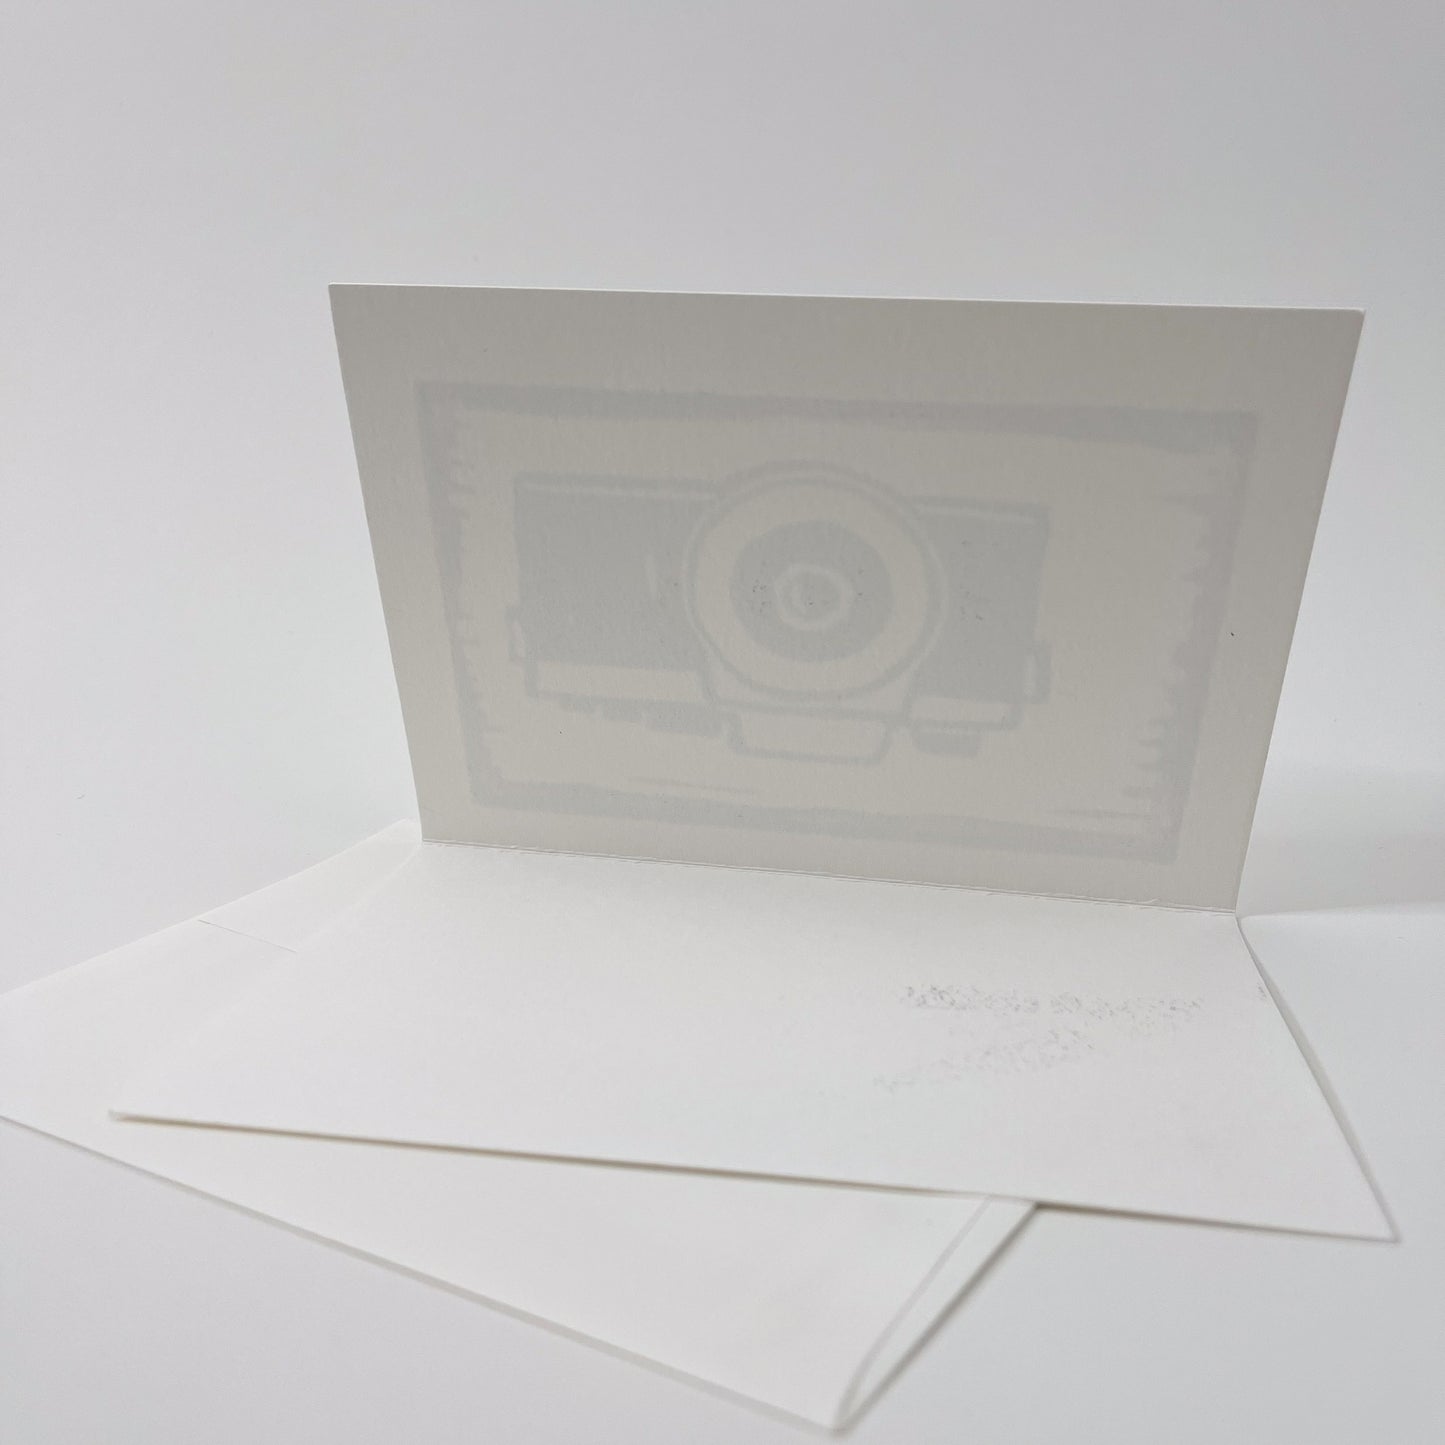 Camera Design Note Card, Hand Printed